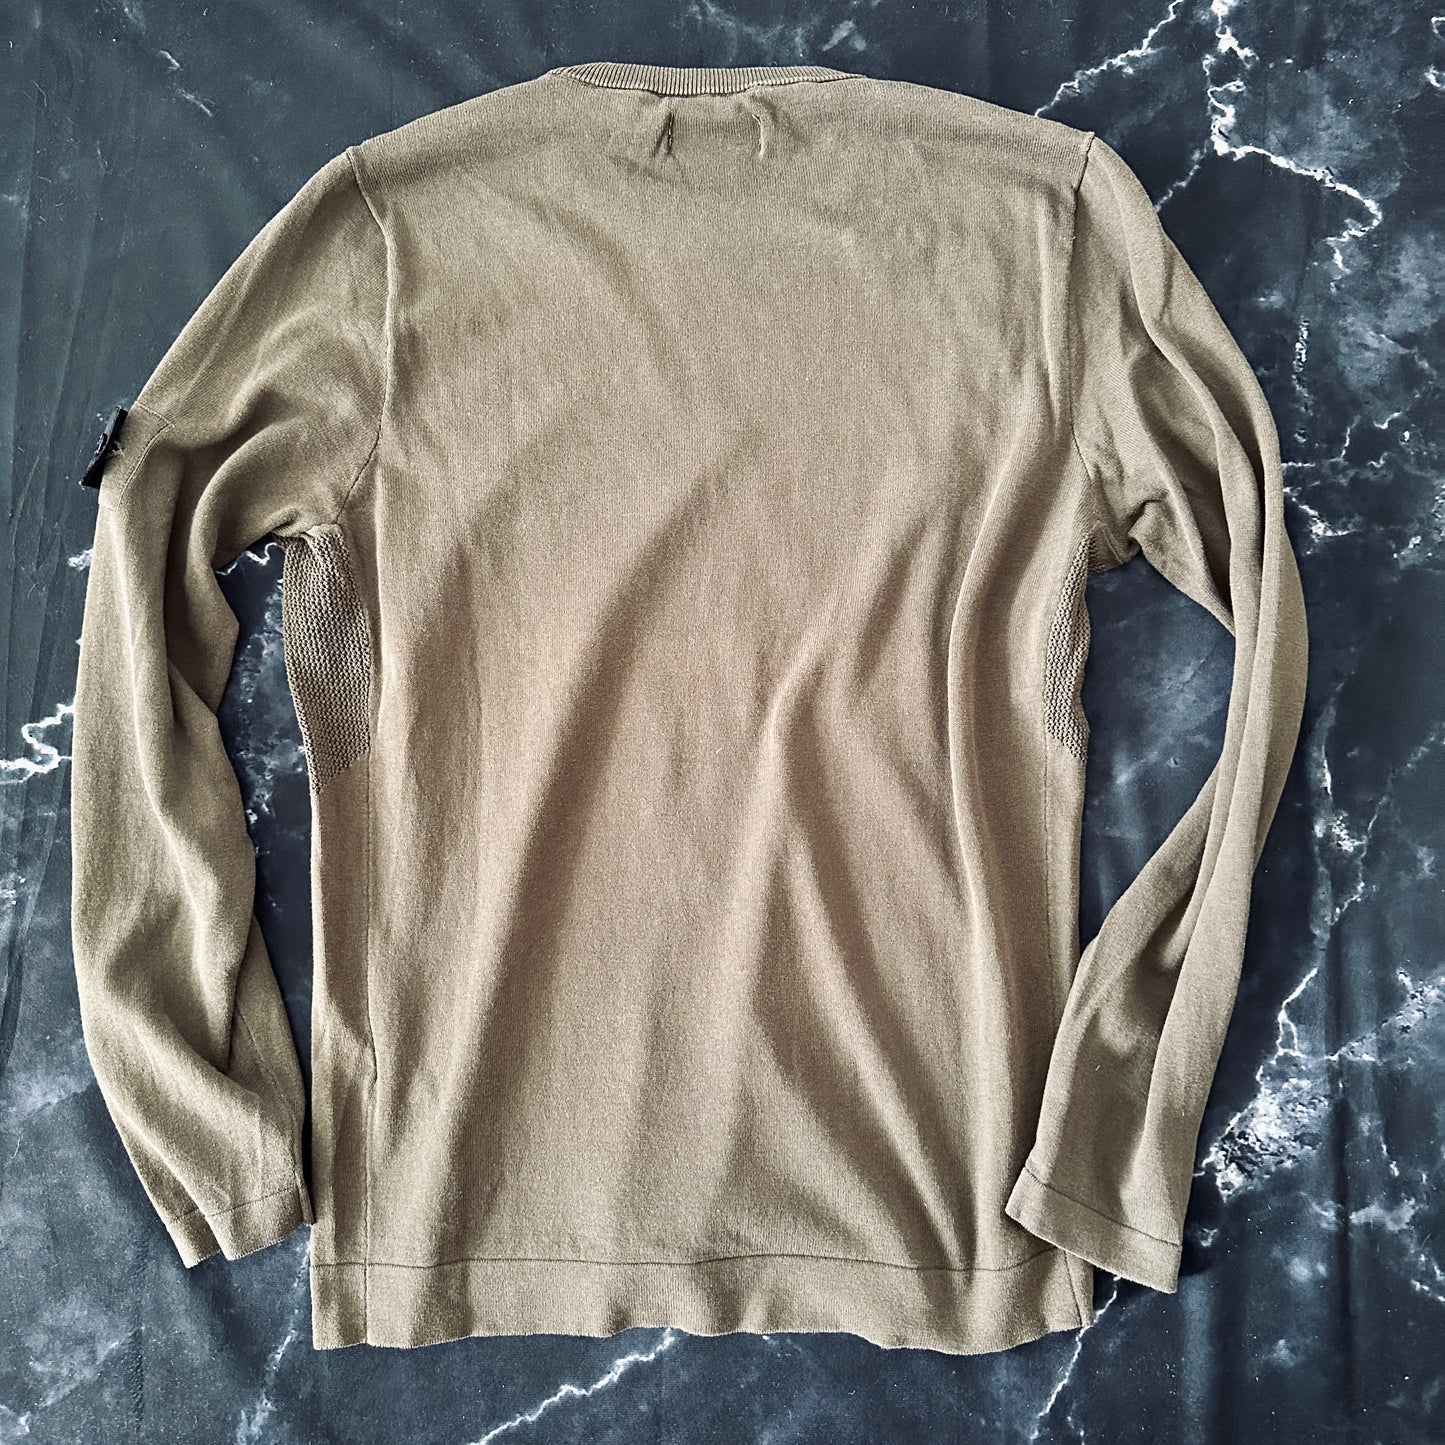 Stone Island Shadow Project 2017 Sweatshirt T-Shirt - XL - Made in Italy